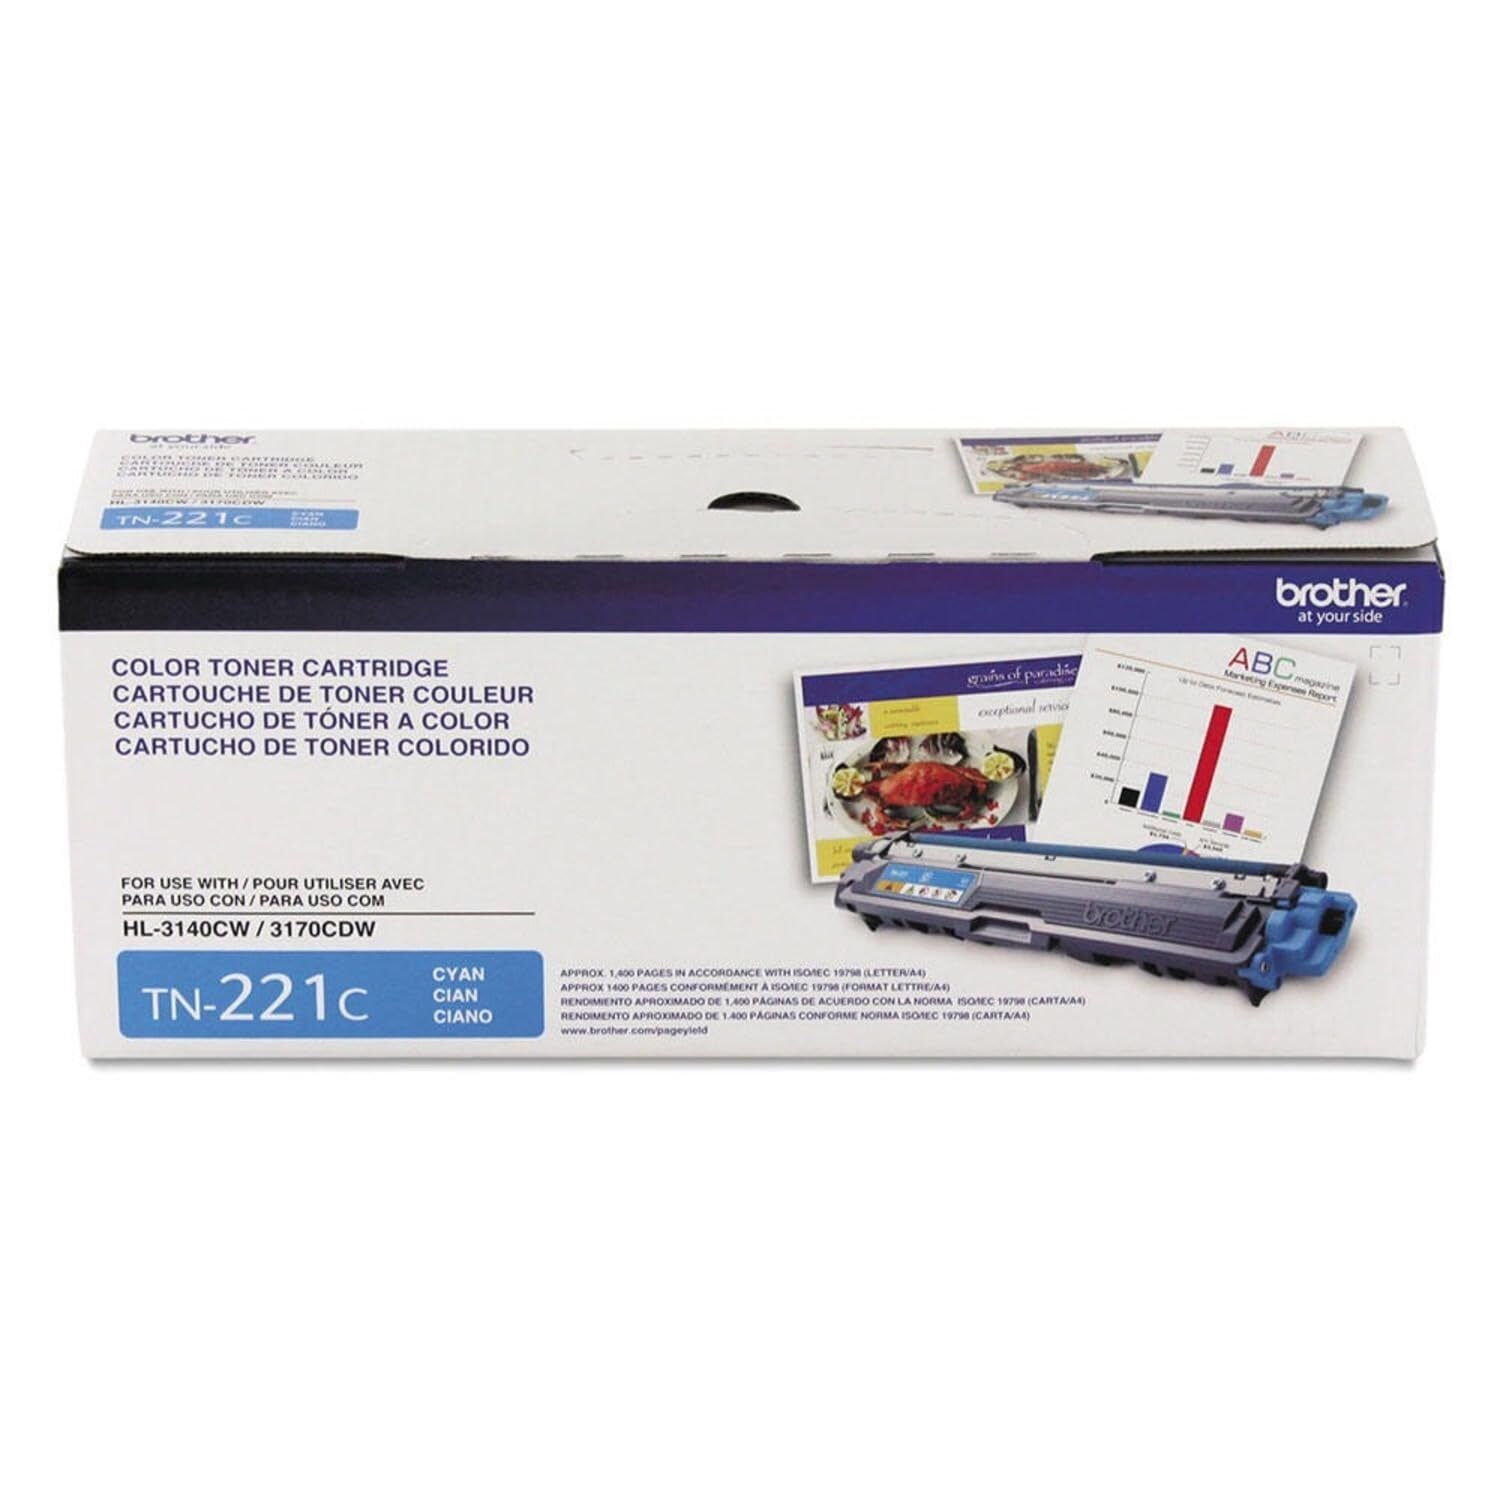 Brother TN-221C Cyan Printer Toner Cartridge, 1400 Page Yield New Damaged Box